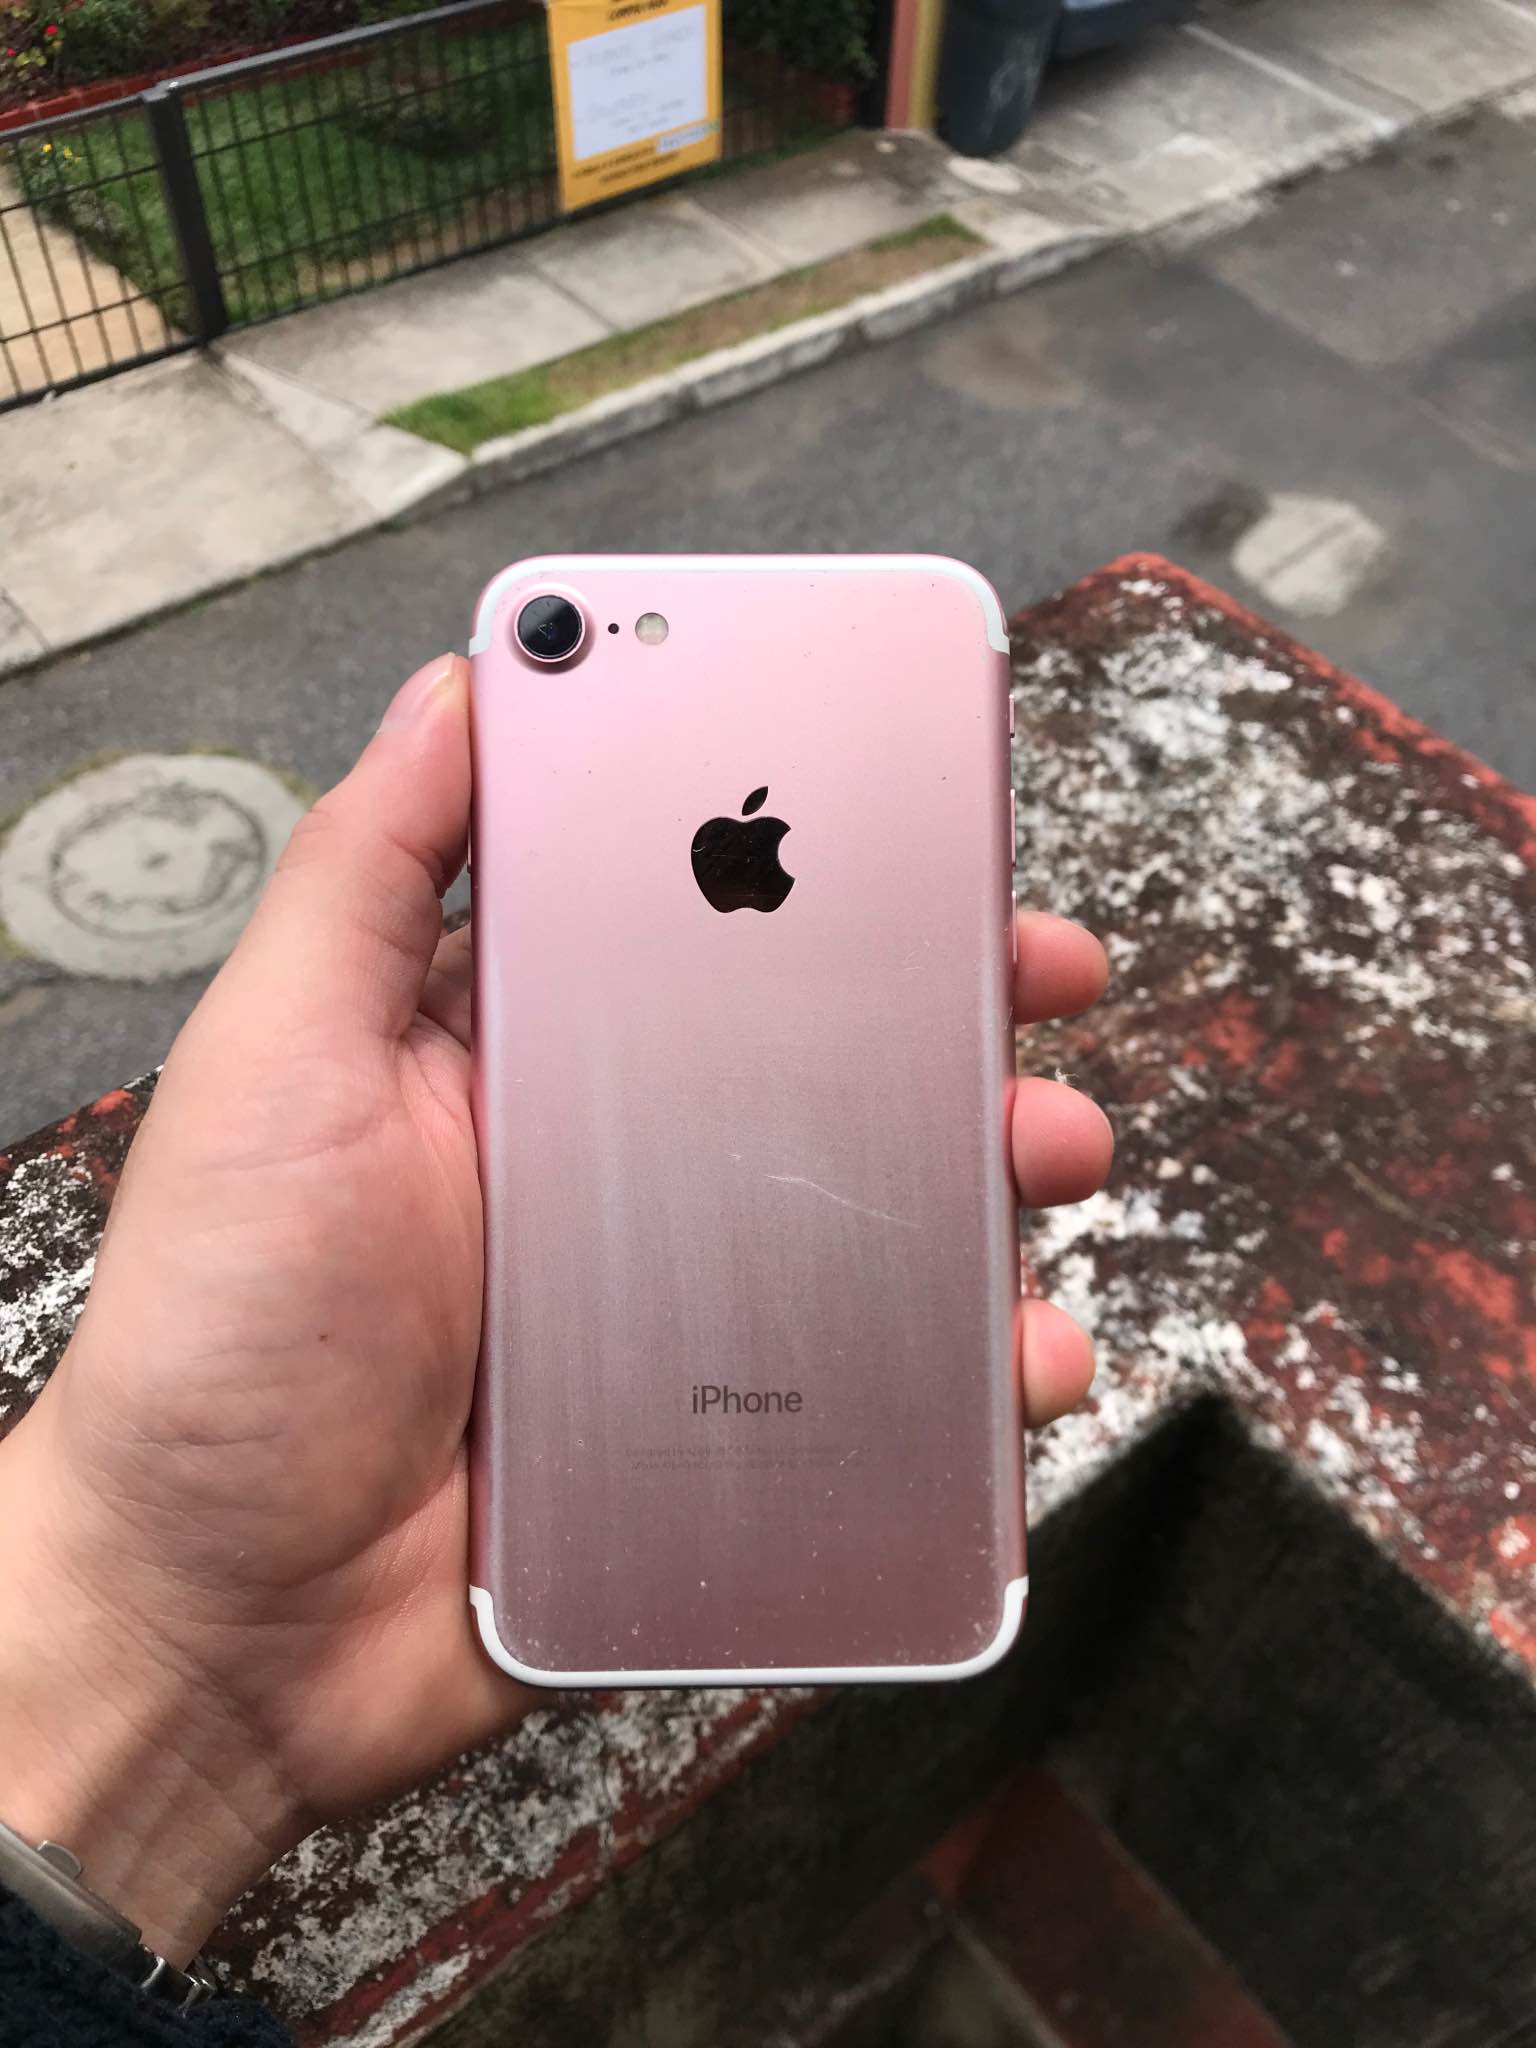 iPhone 7 GOLD ROSE de 32 Gb PARA  LIBERAR Estado 9/10 le sirve Todo, sin iCloud. Q1,375.00